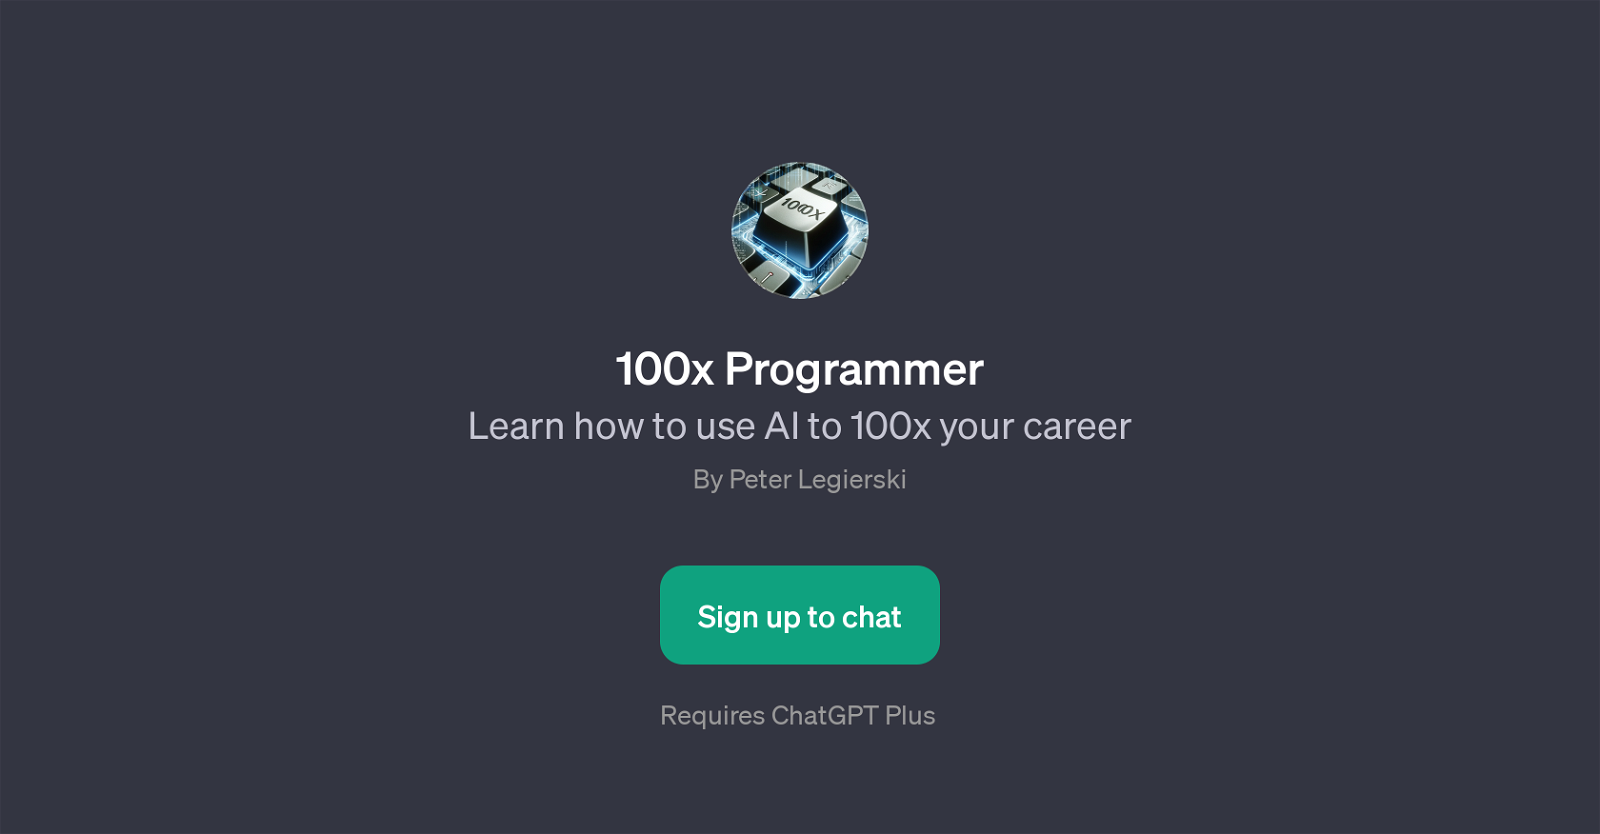 100x Programmer website